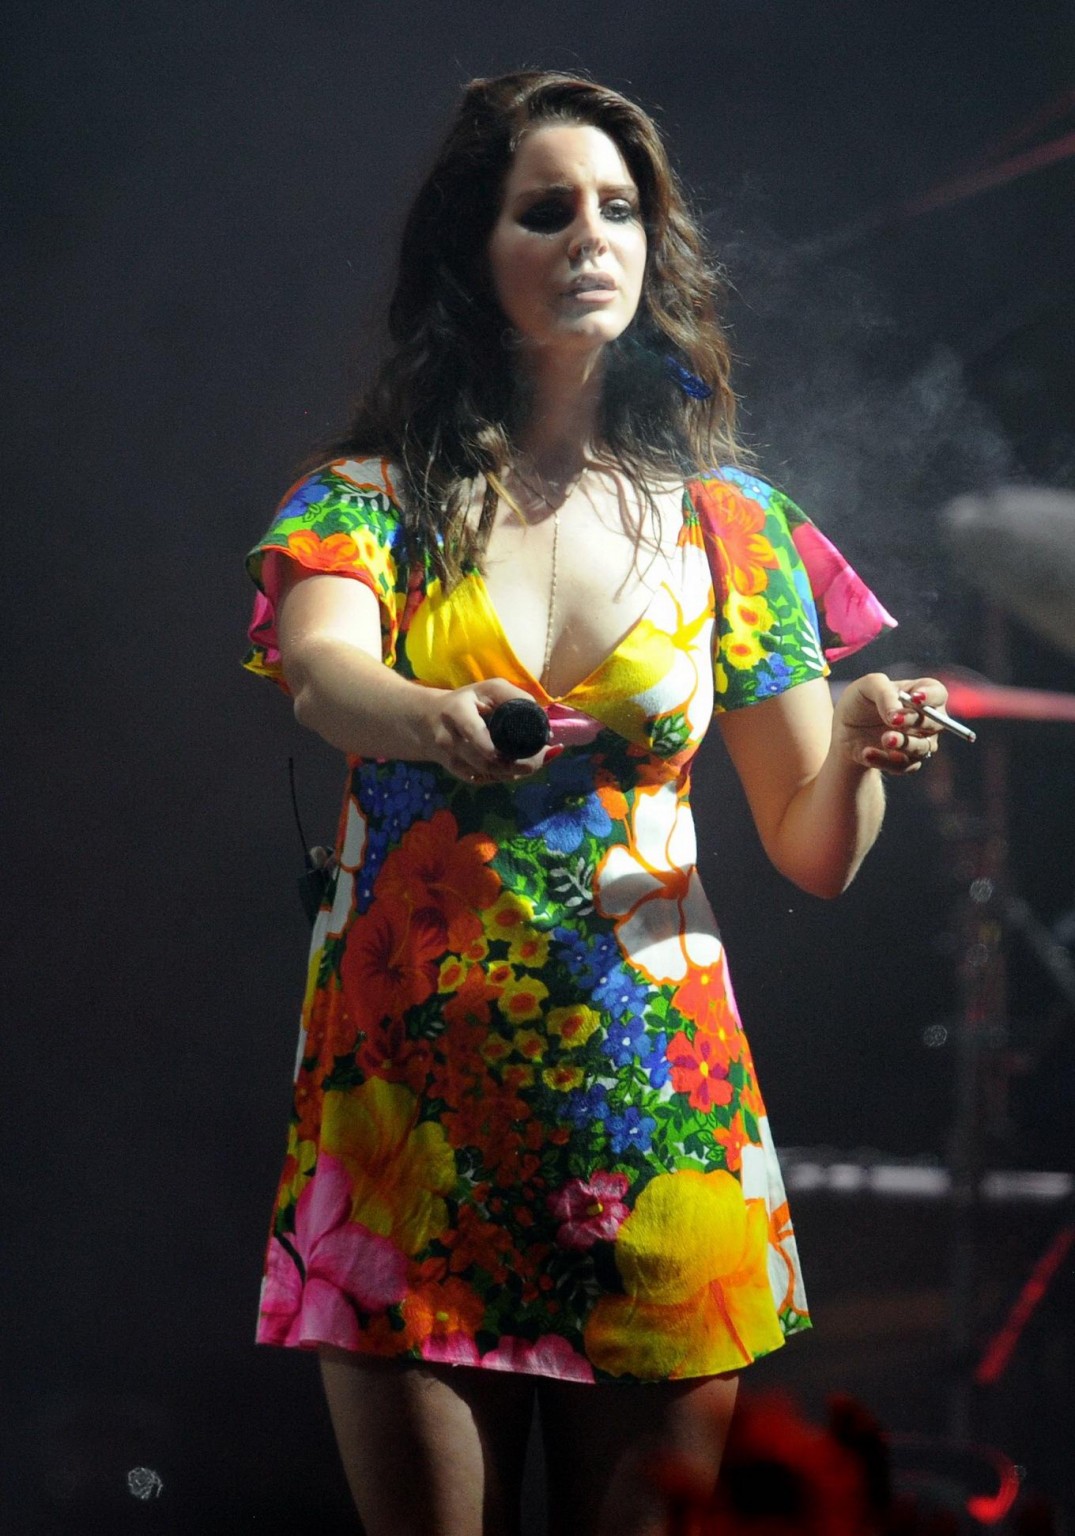 Lana Del Rey bra peek  upskirt while performing in summer mini dress at the 2014 #75197015